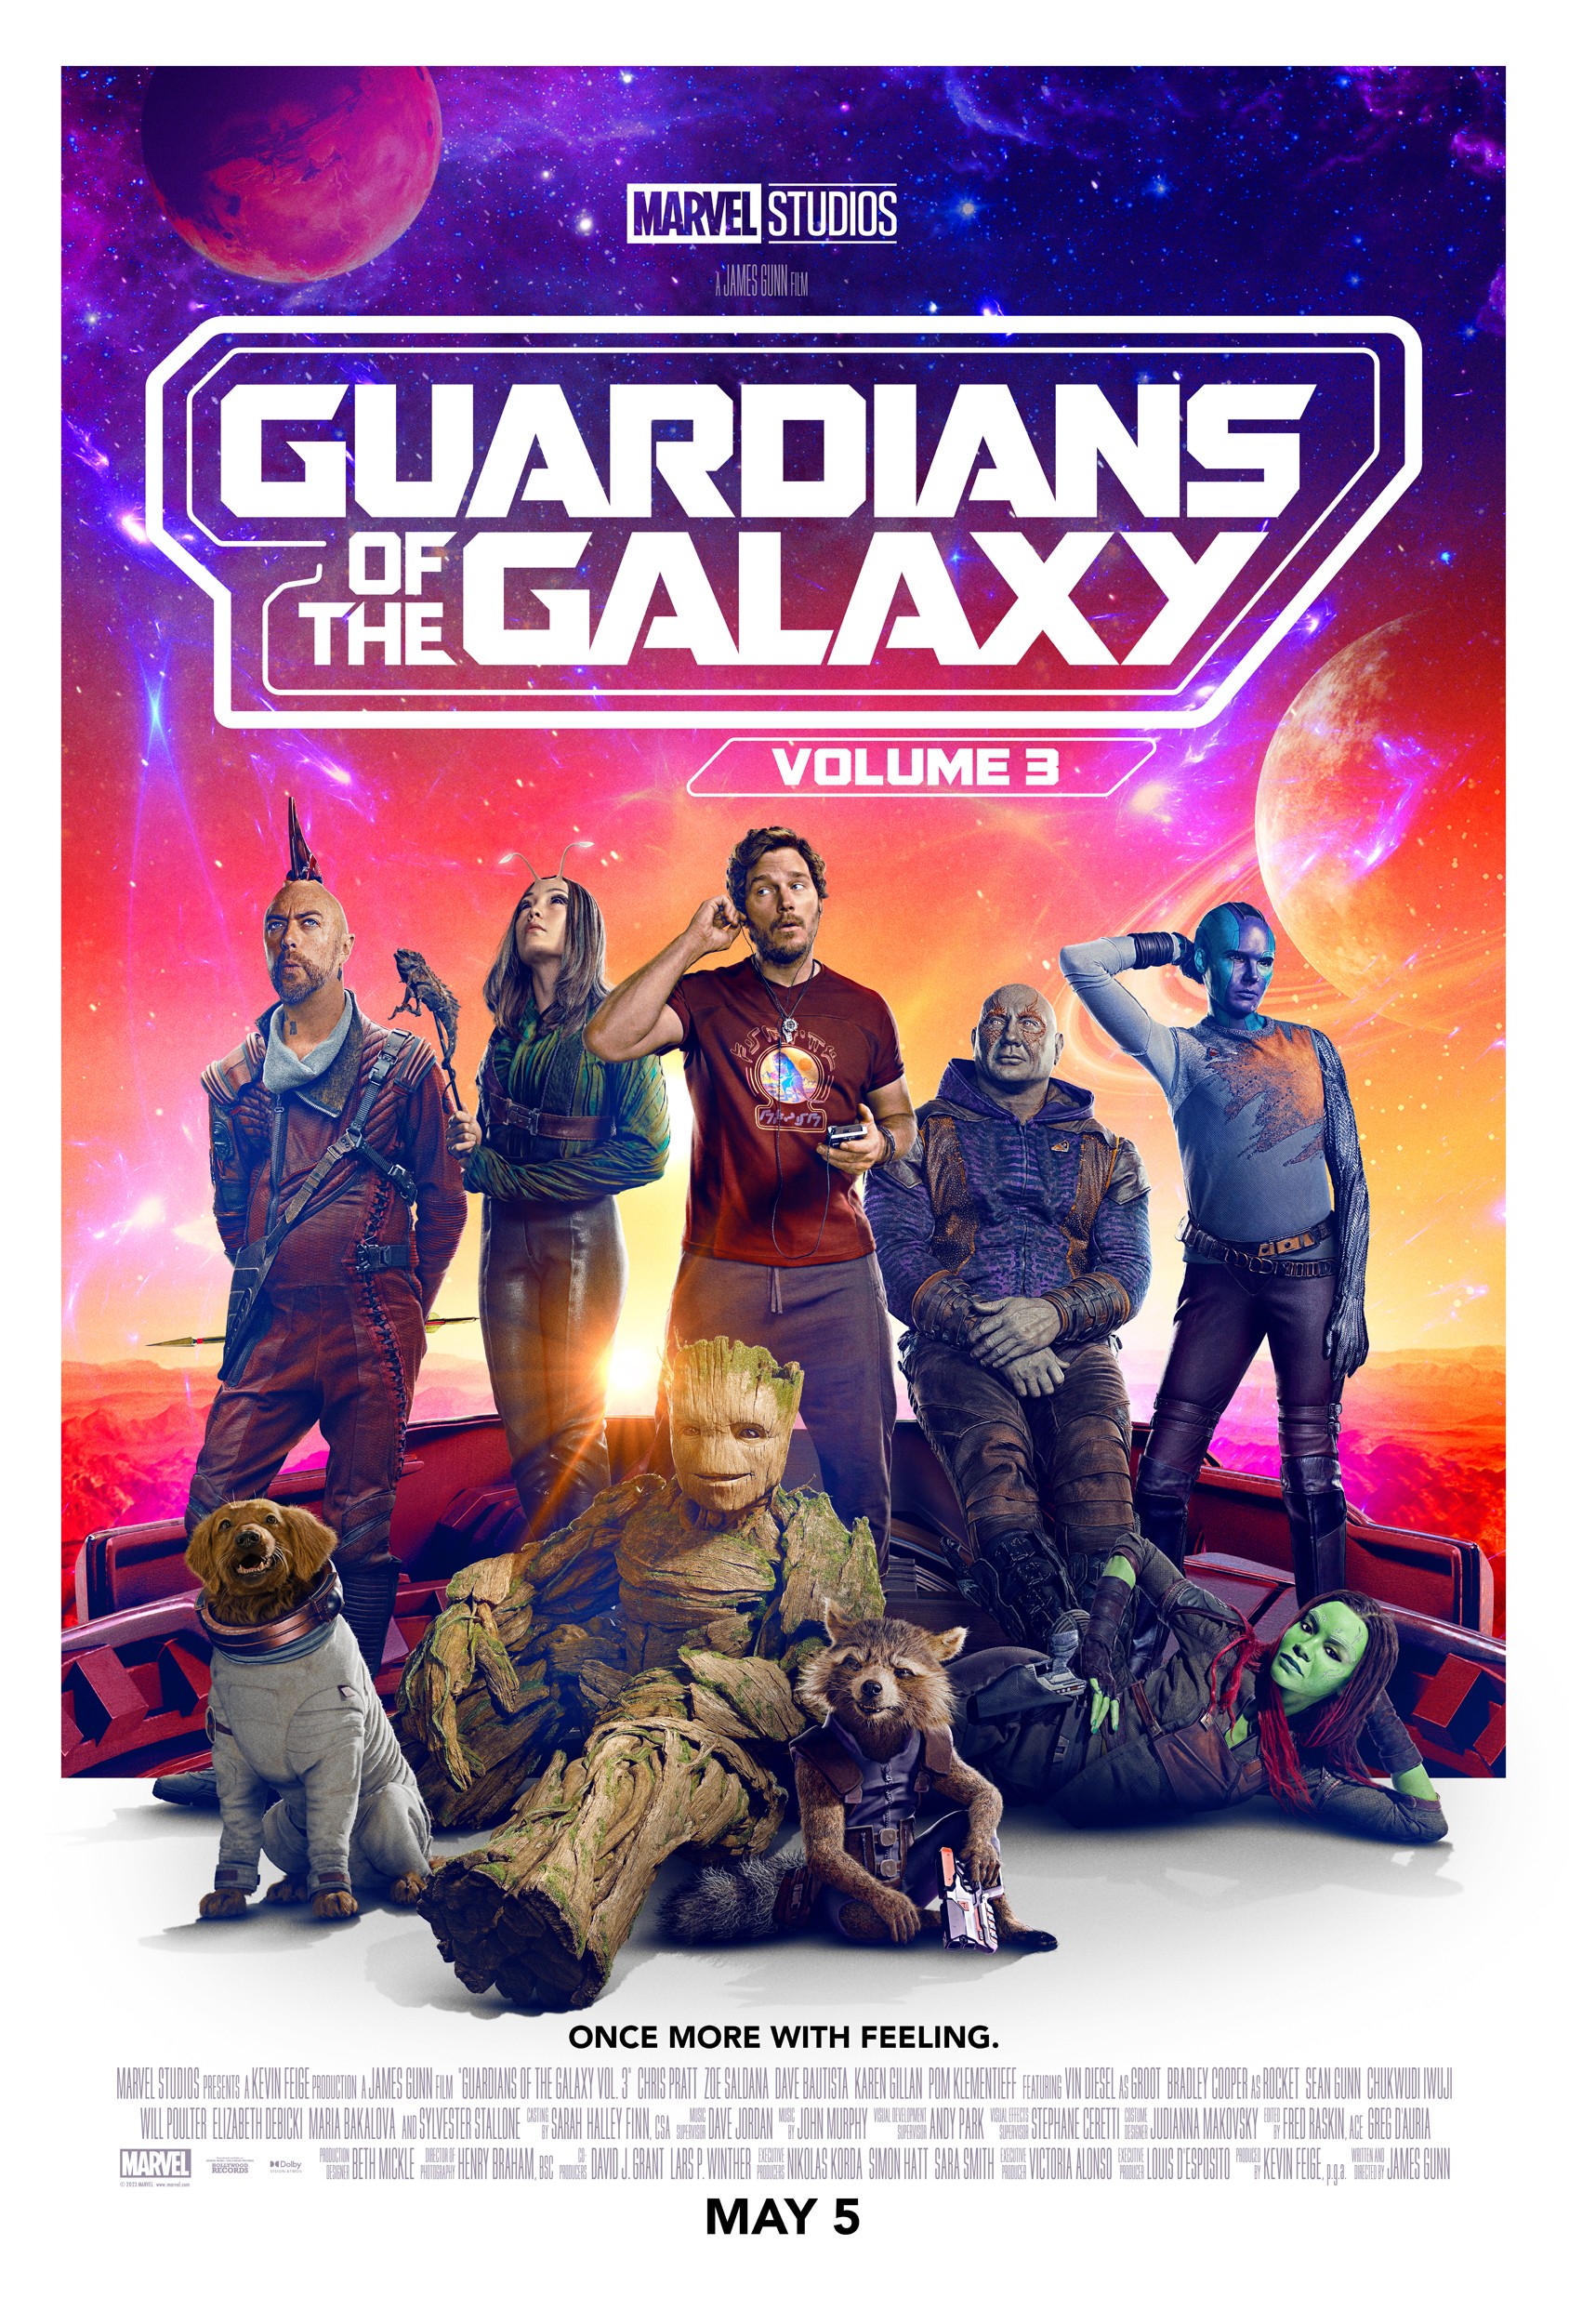 Poster Marvel Gardiens de la Galaxie - All Guardian! [Rocket & Groot]